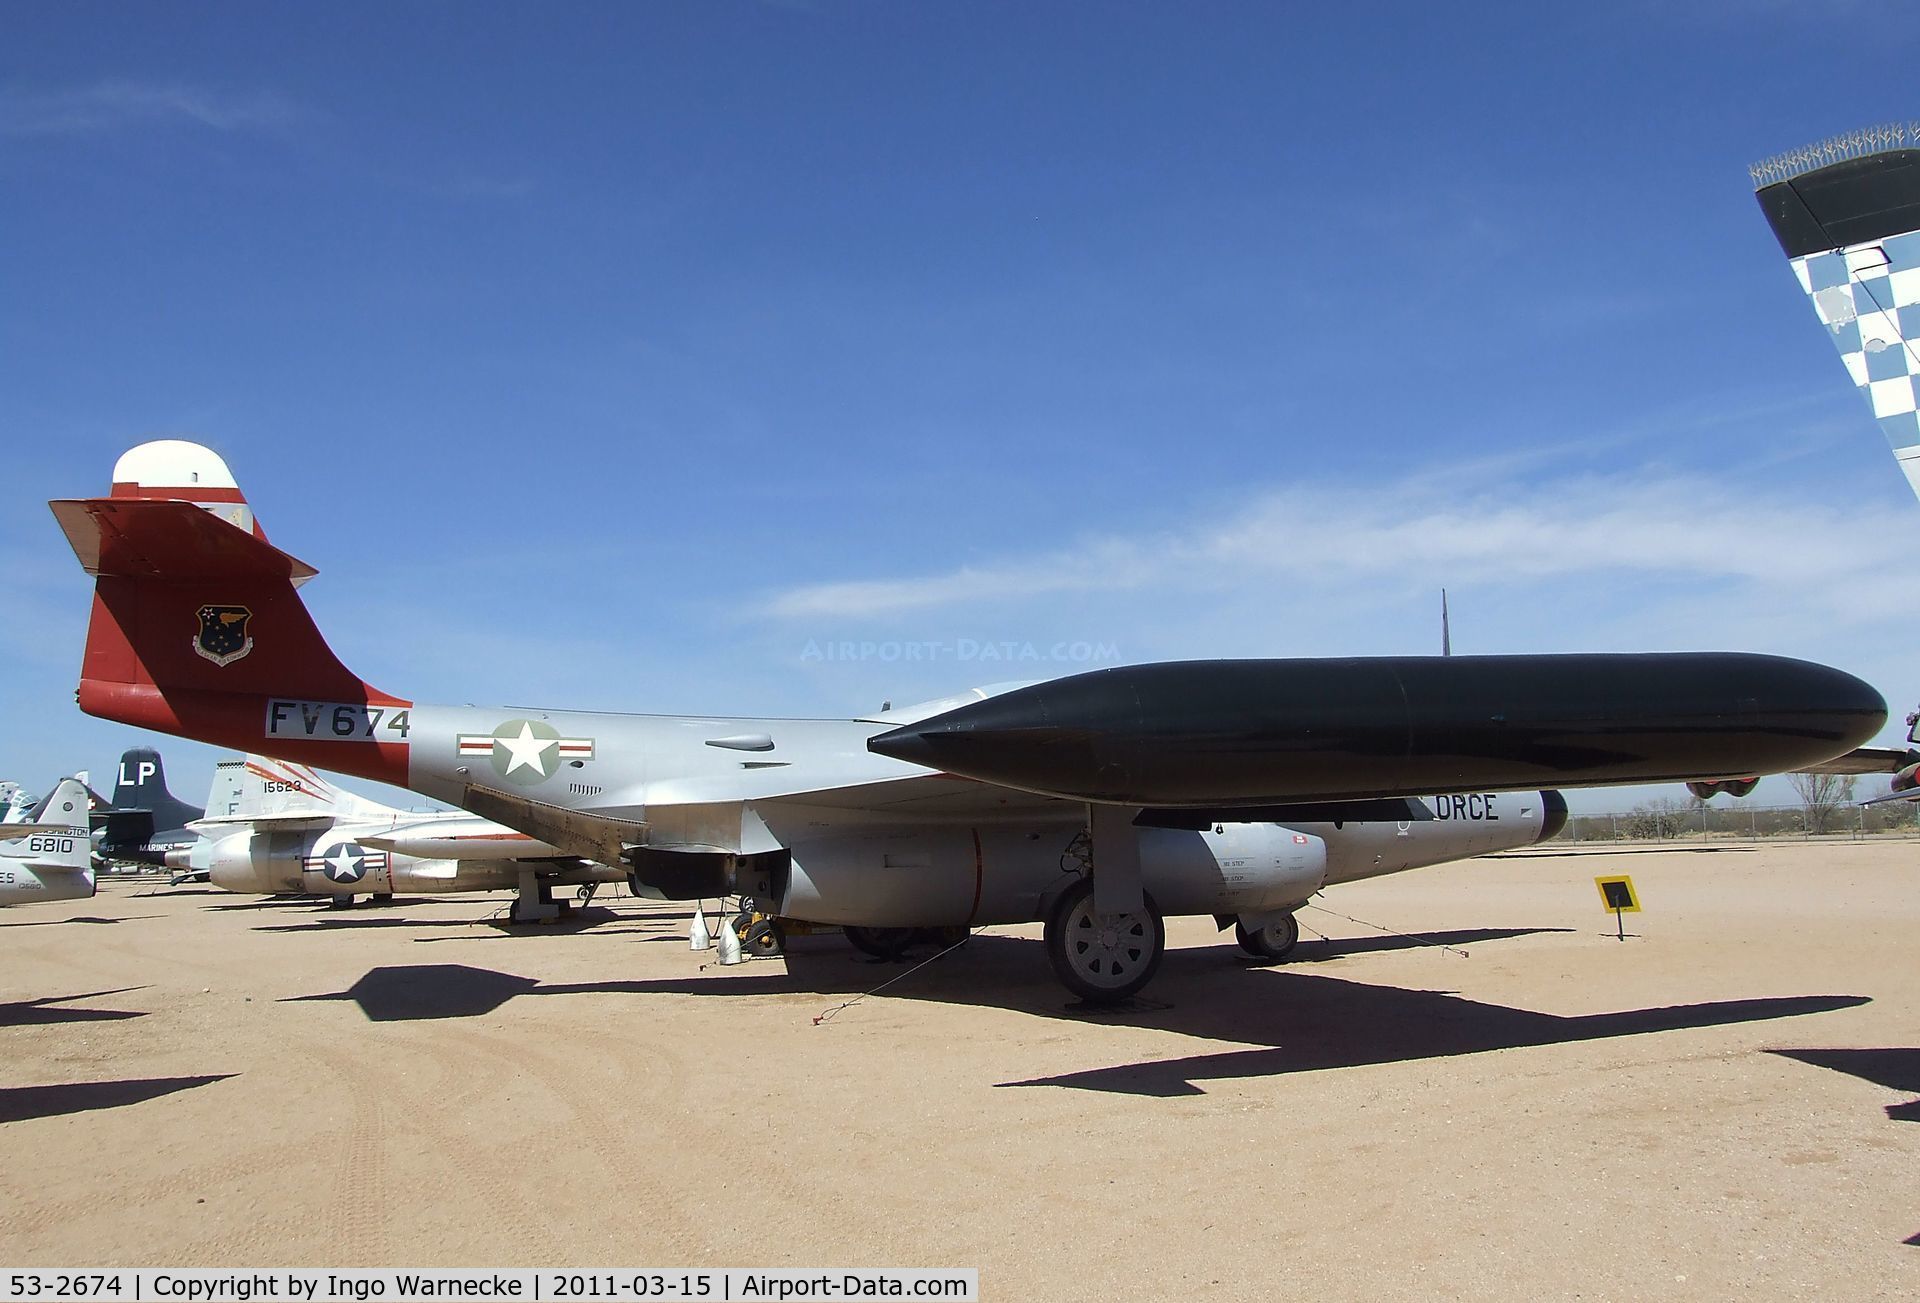 53-2674, Northrop F-89J Scorpion C/N 4805, Northrop F-89J Scorpion at the Pima Air & Space Museum, Tucson AZ